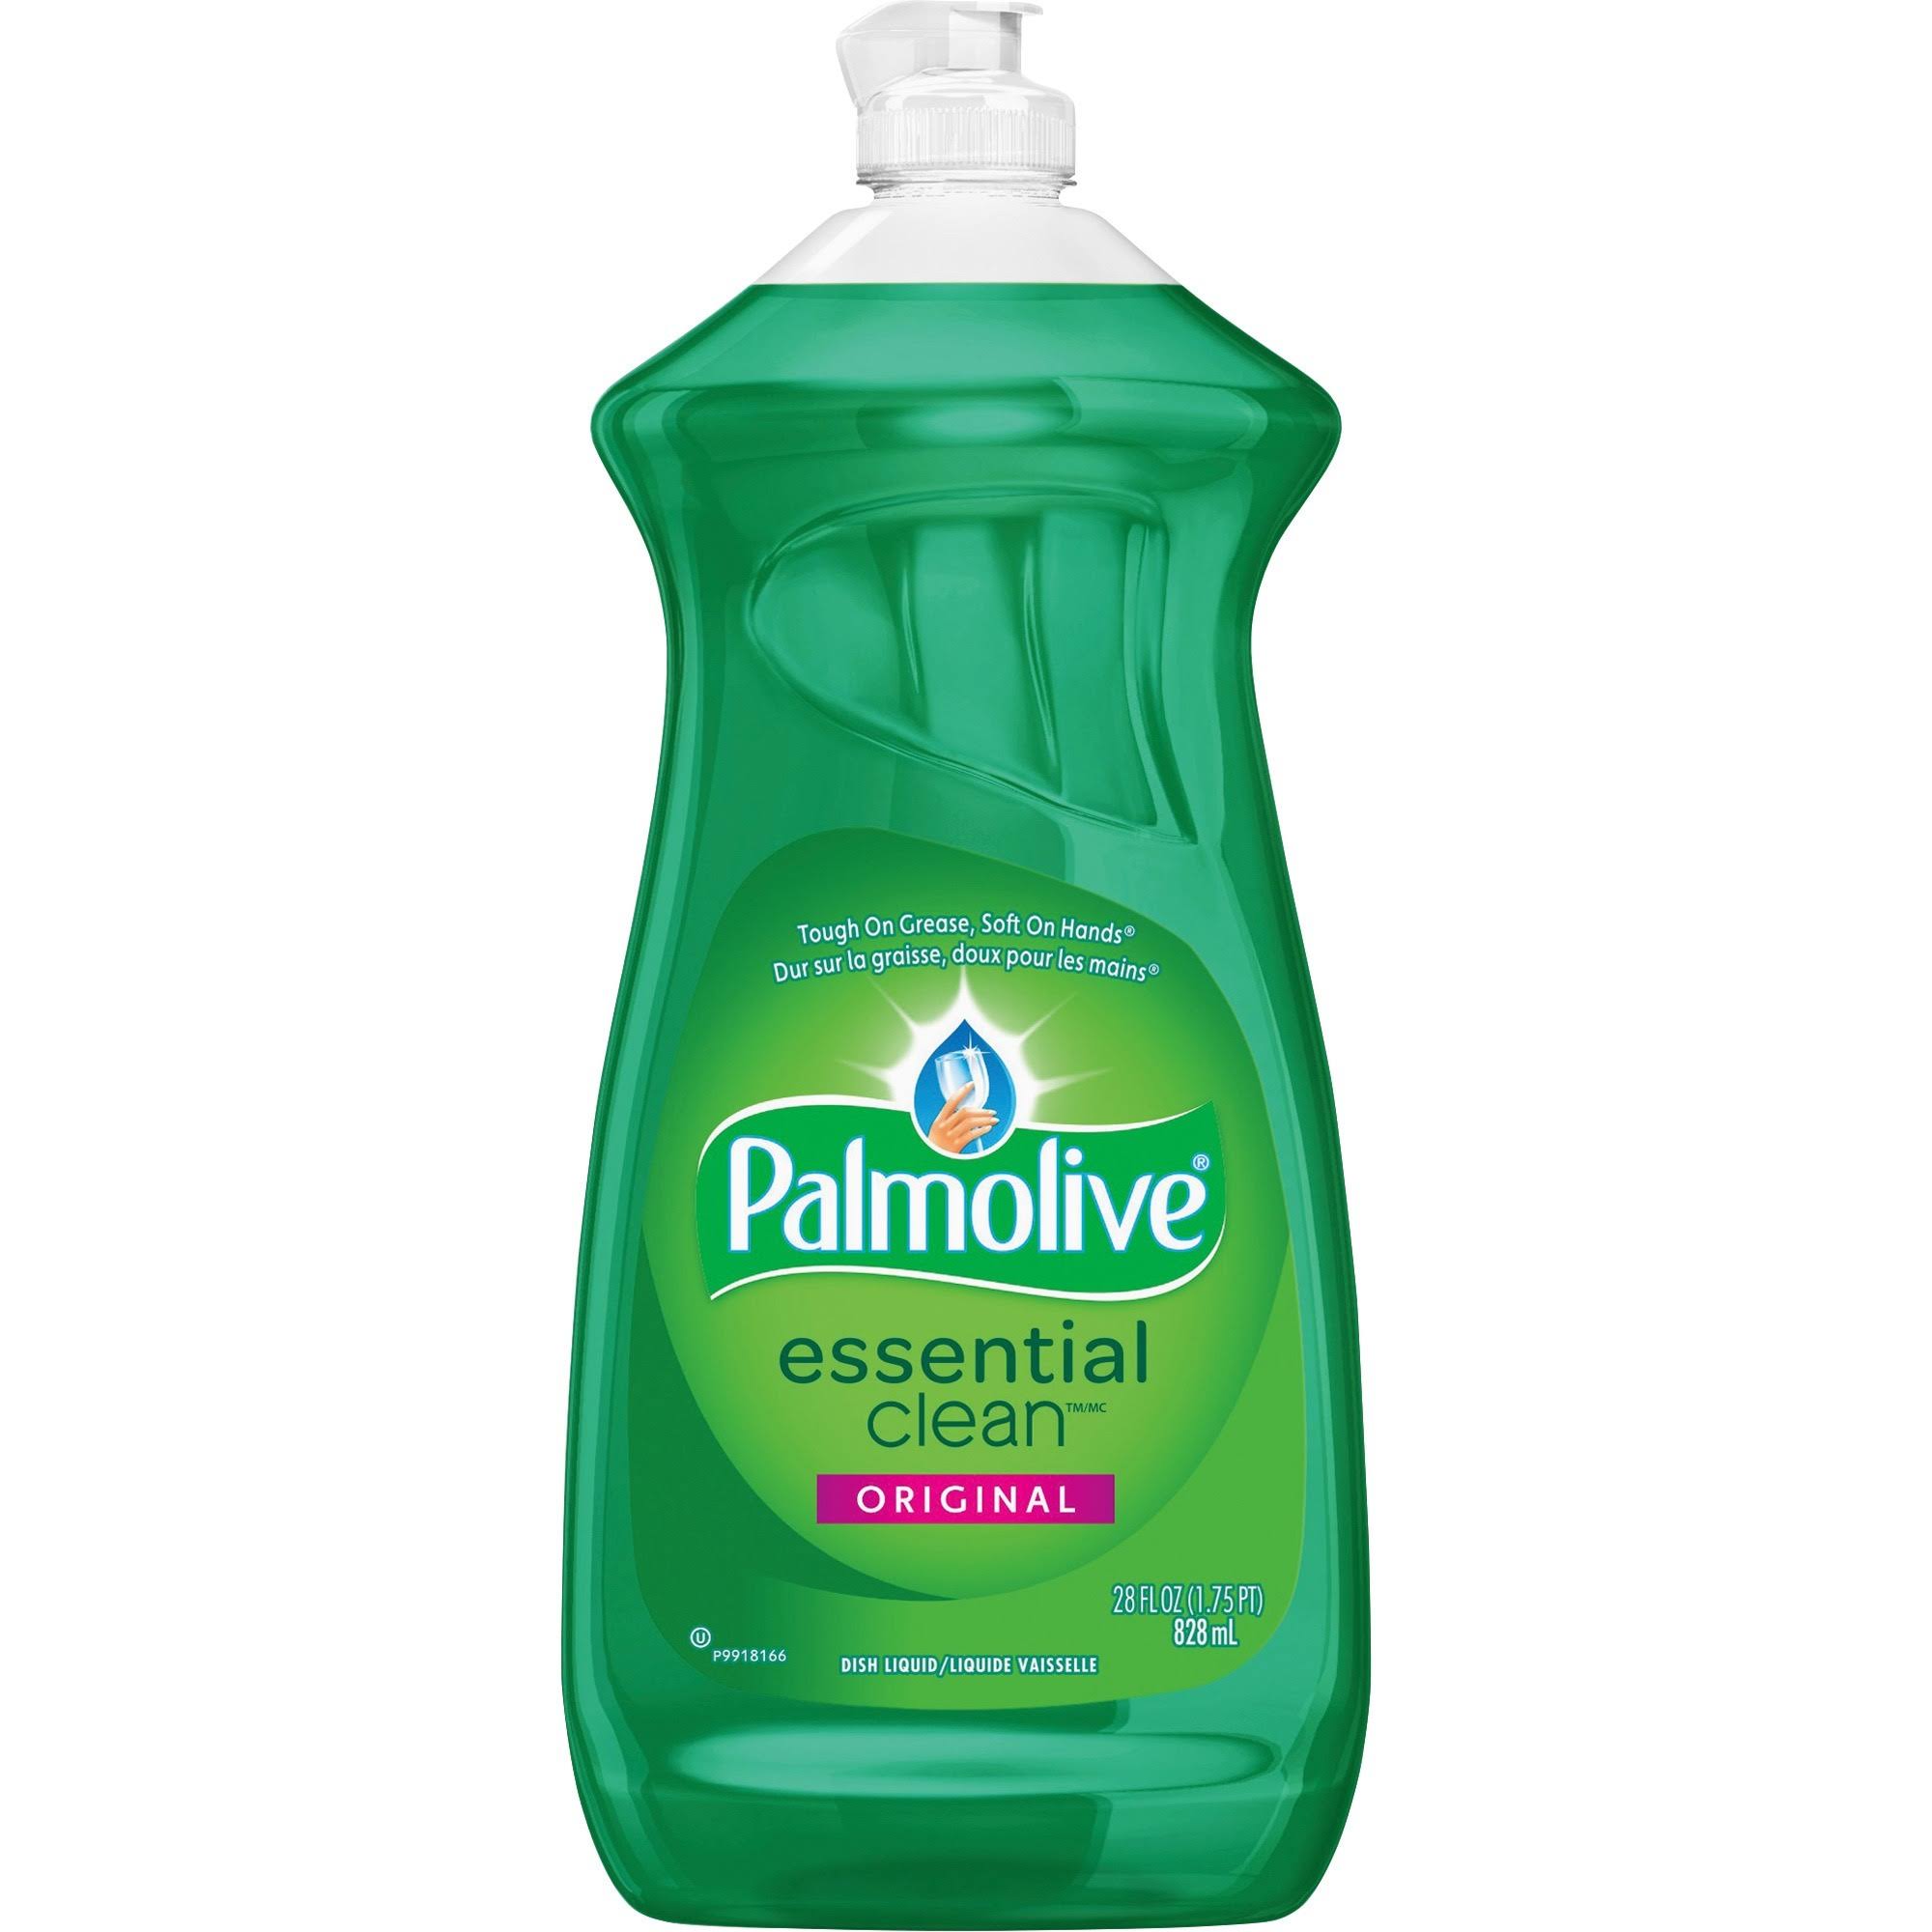 Palmolive Dishwashing Liquid & Hand Soap - Original Scent, 28oz